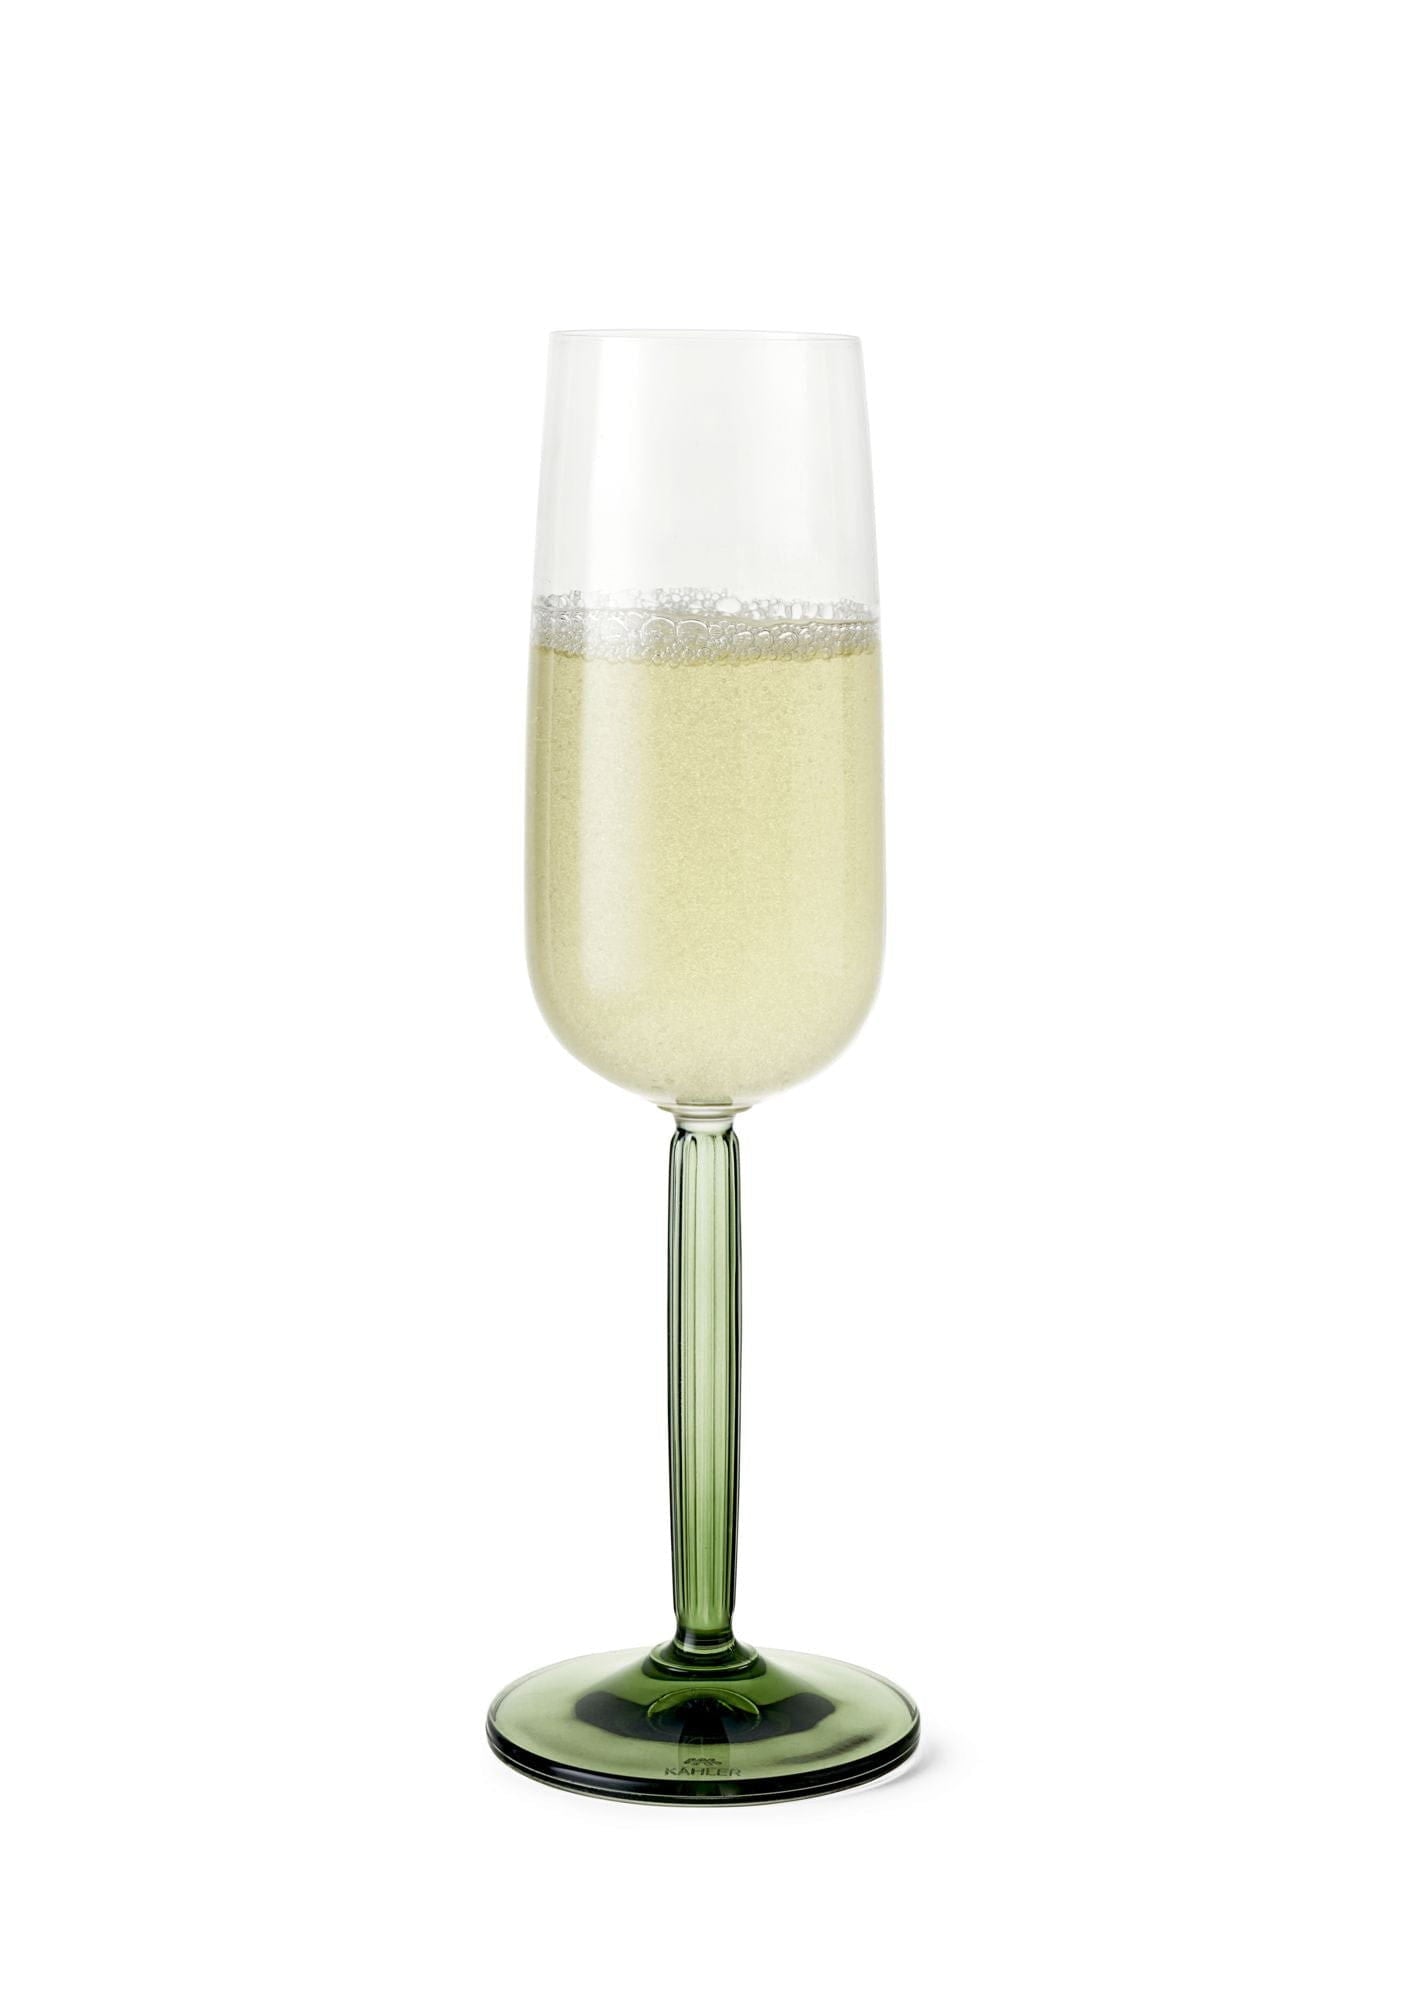 Kähler Hammershøi Champagne Glass Set van 240 ml, groen